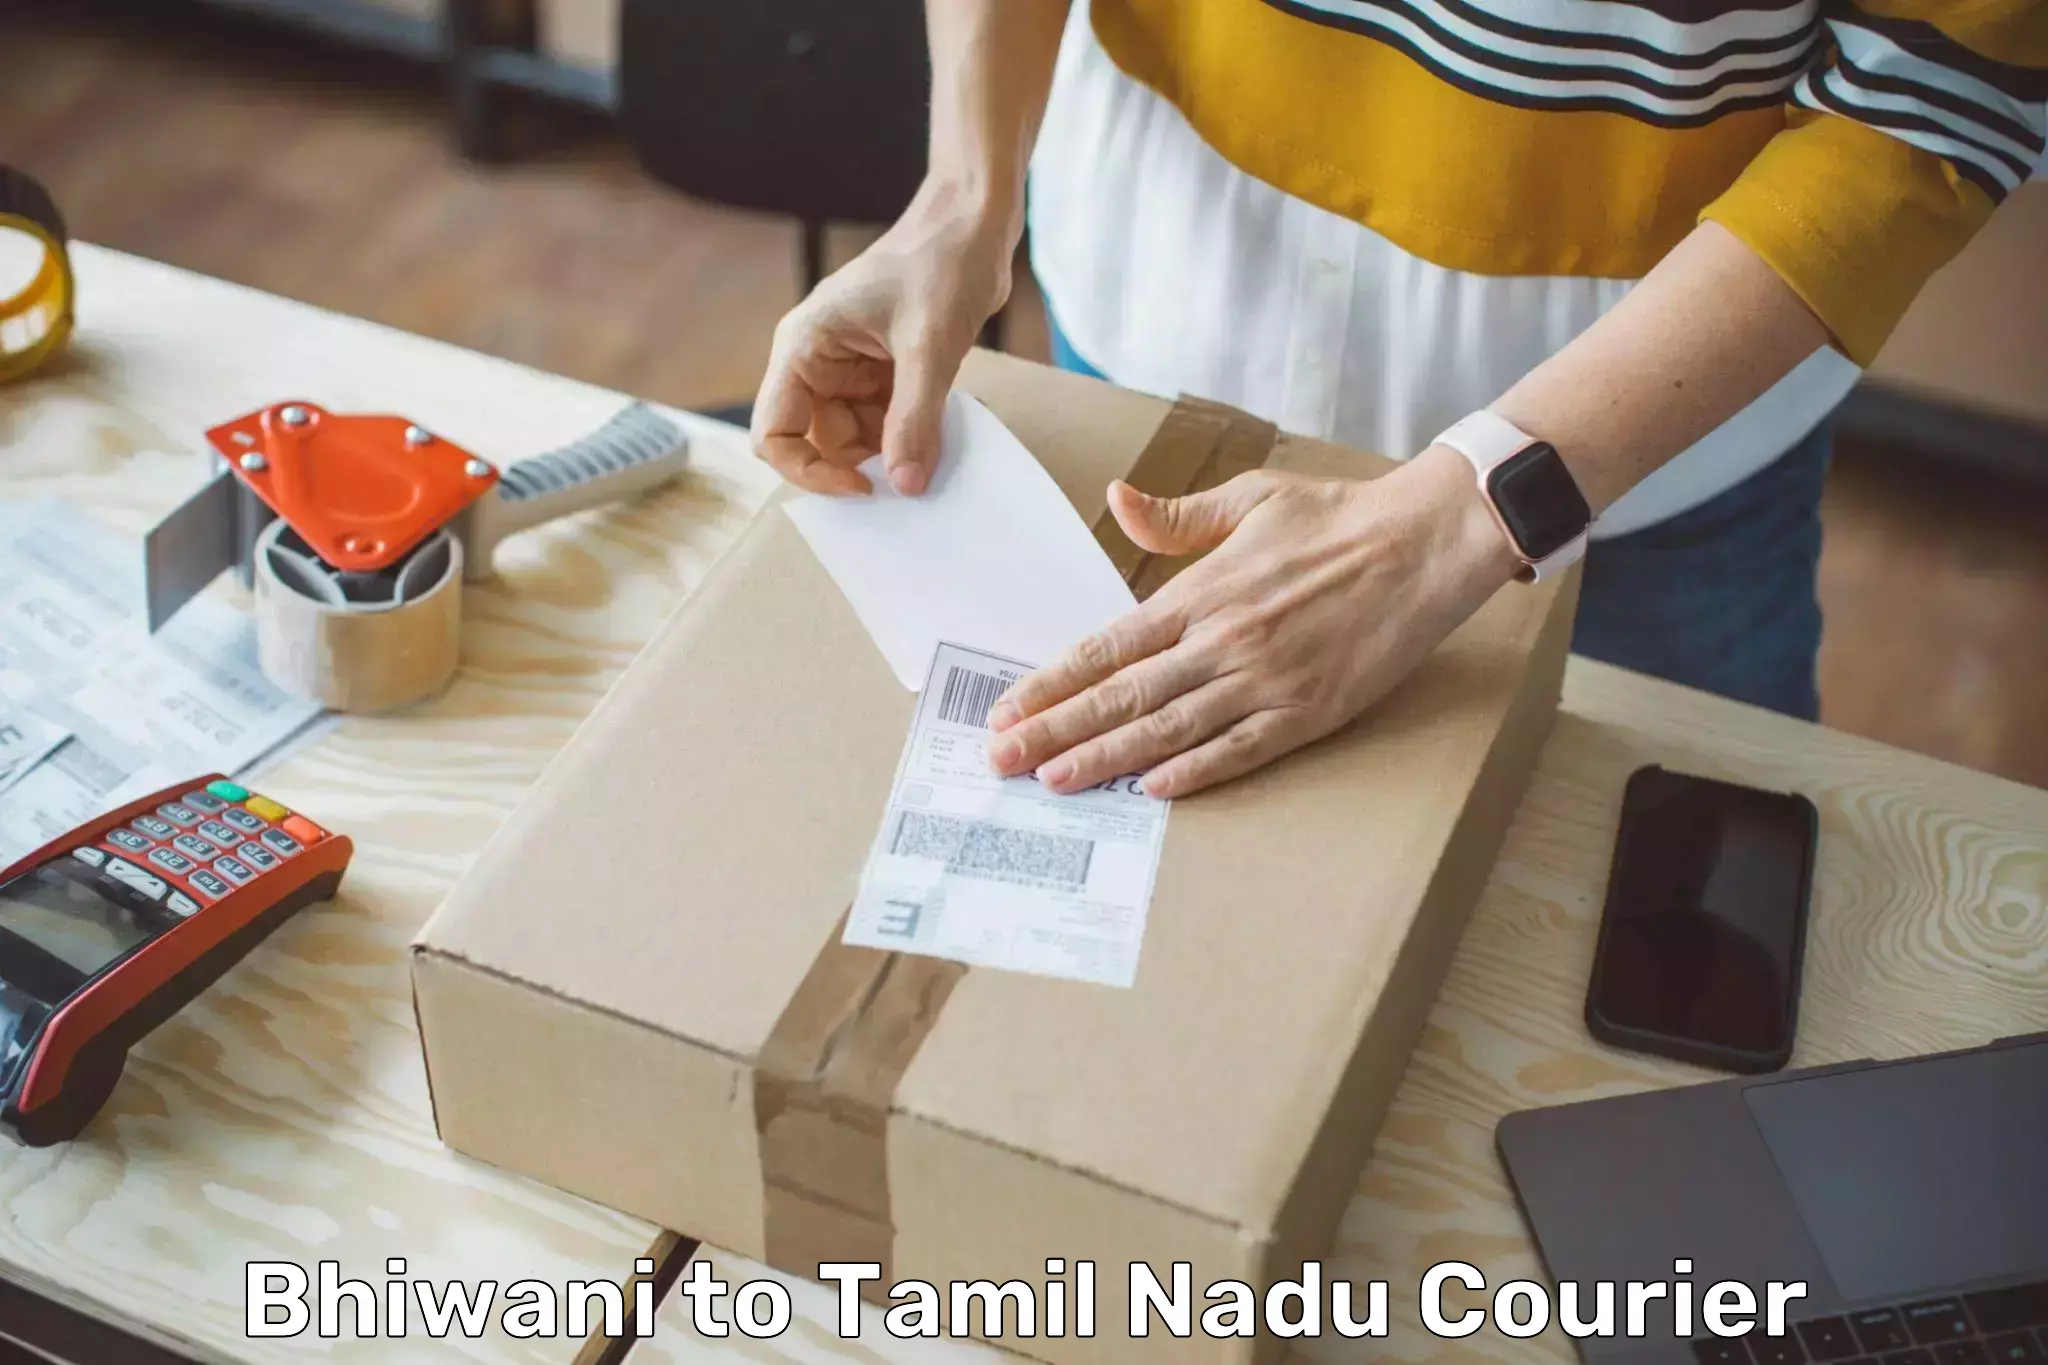 Professional courier handling Bhiwani to Tamil Nadu